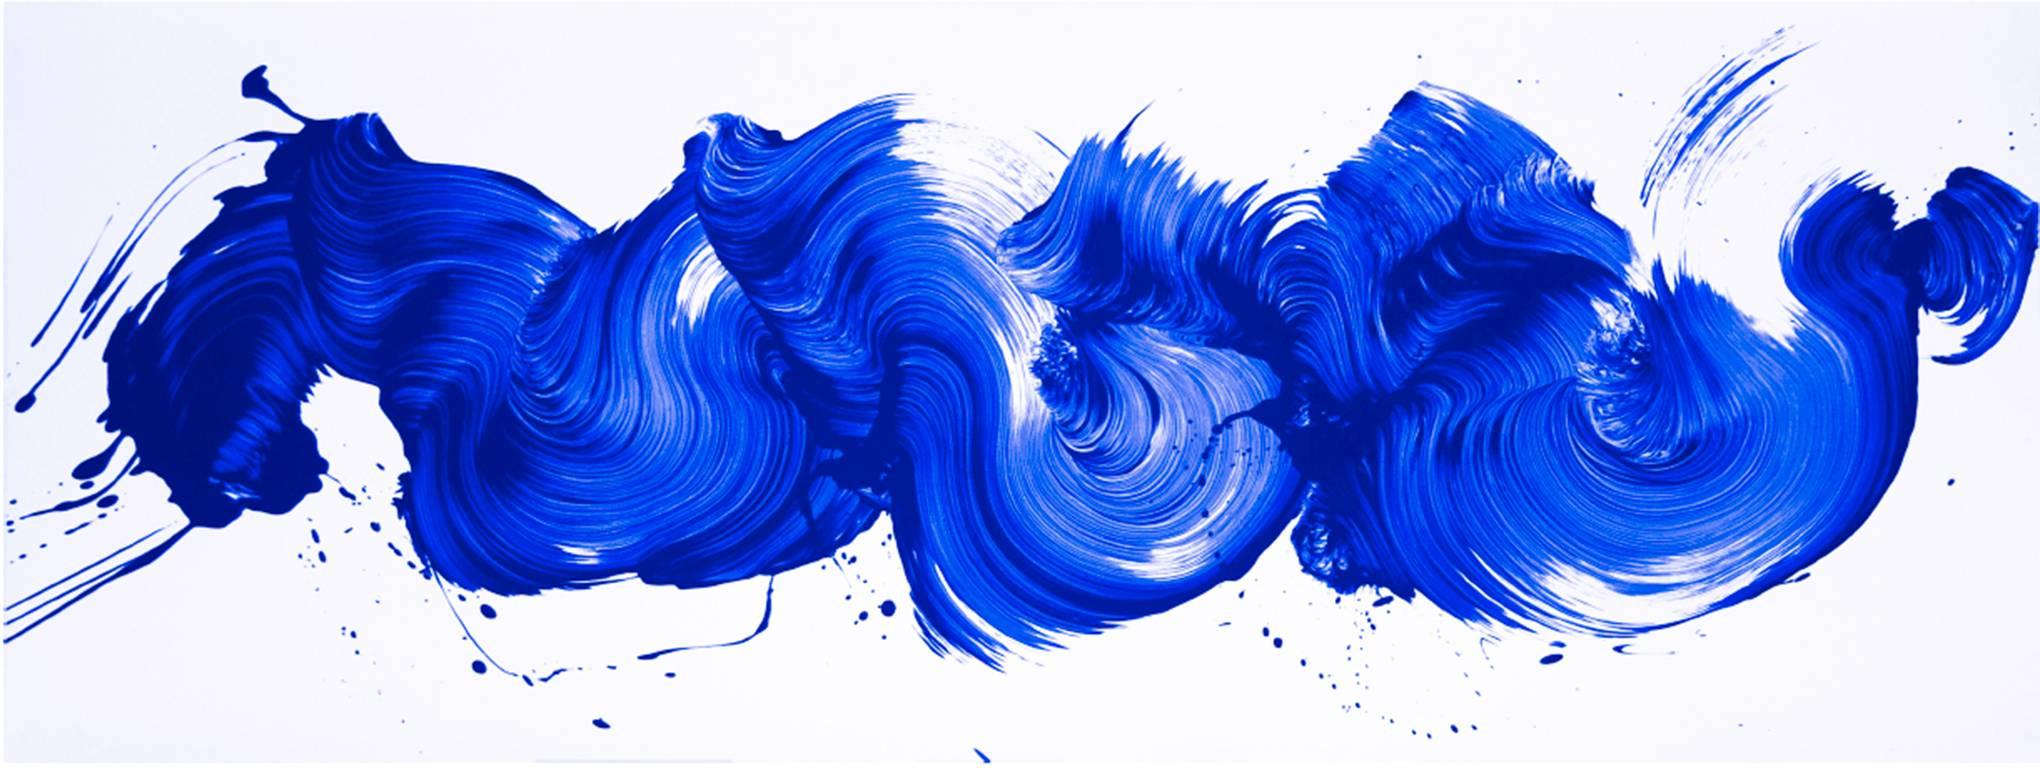 James Nares Abstract Print - I'm Blue